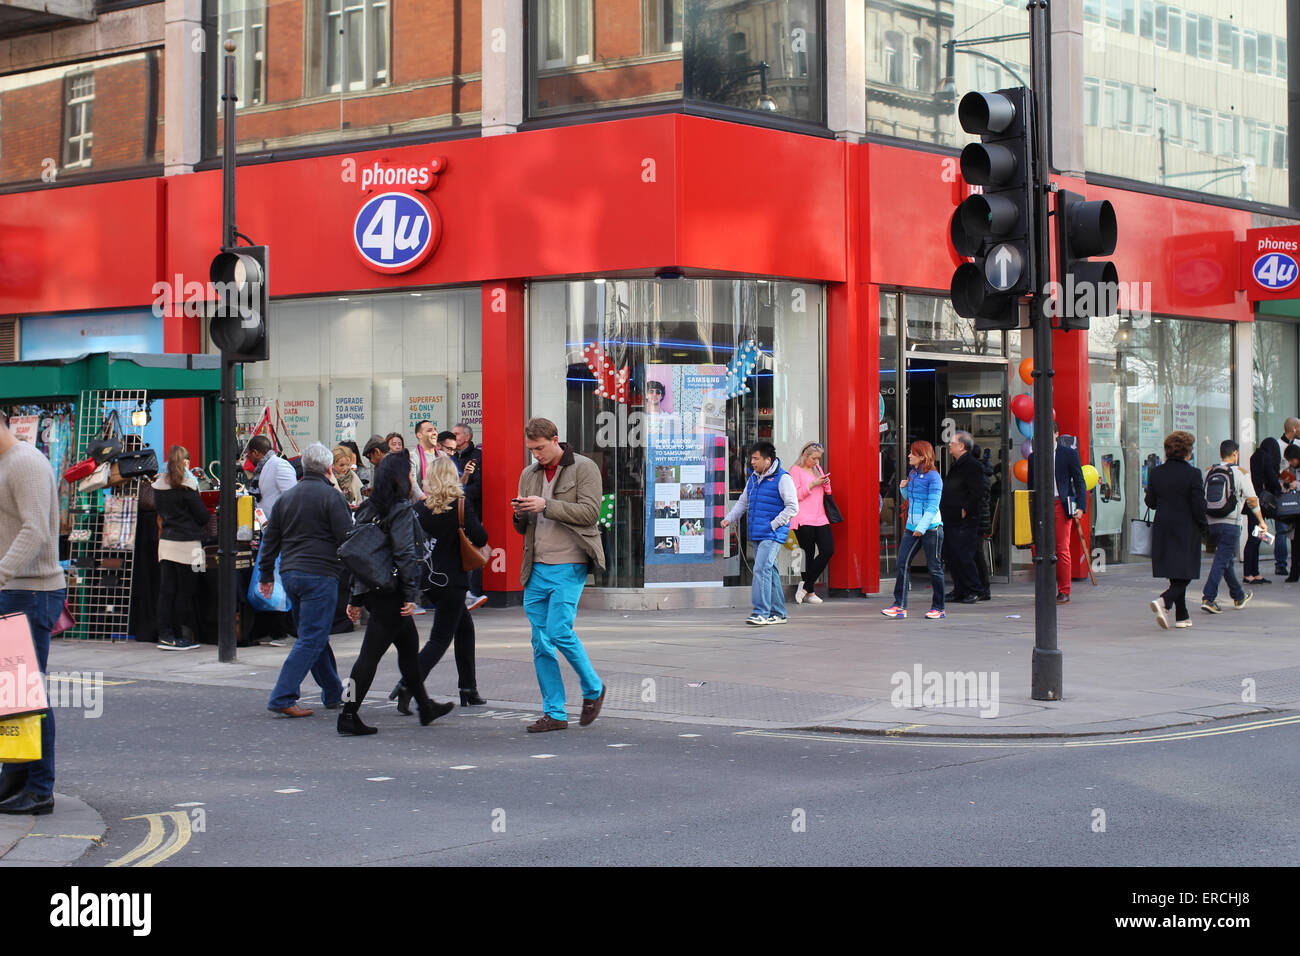 Phones 4u shop on Oxford Street London Stock Photo